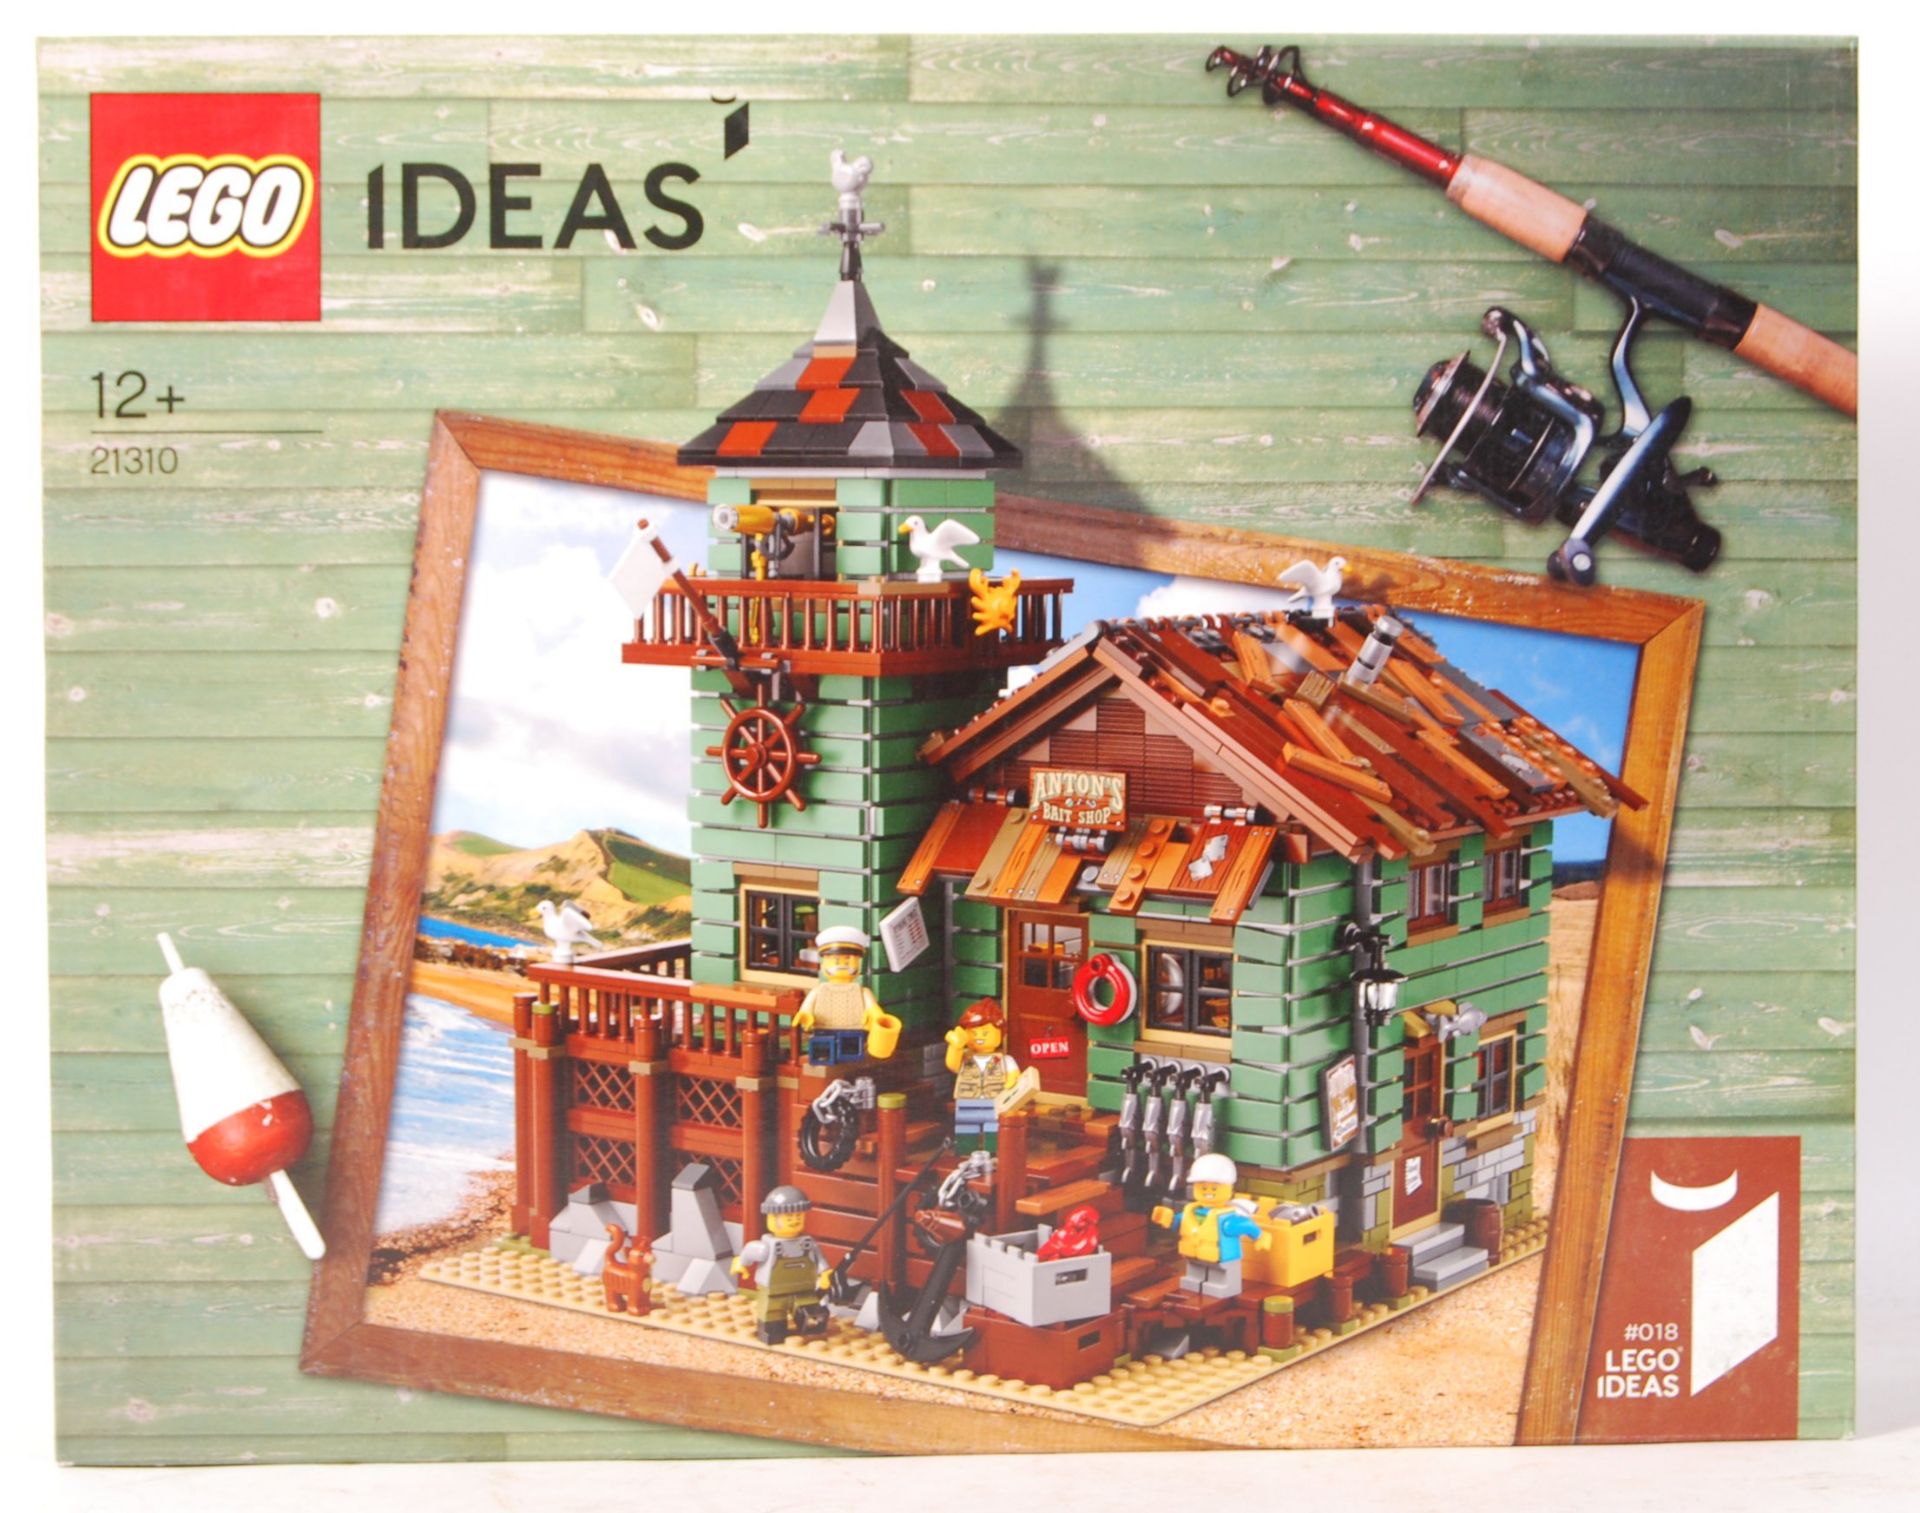 LEGO IDEAS ' OLD FISHING STORE ' 21310 BOXED SET